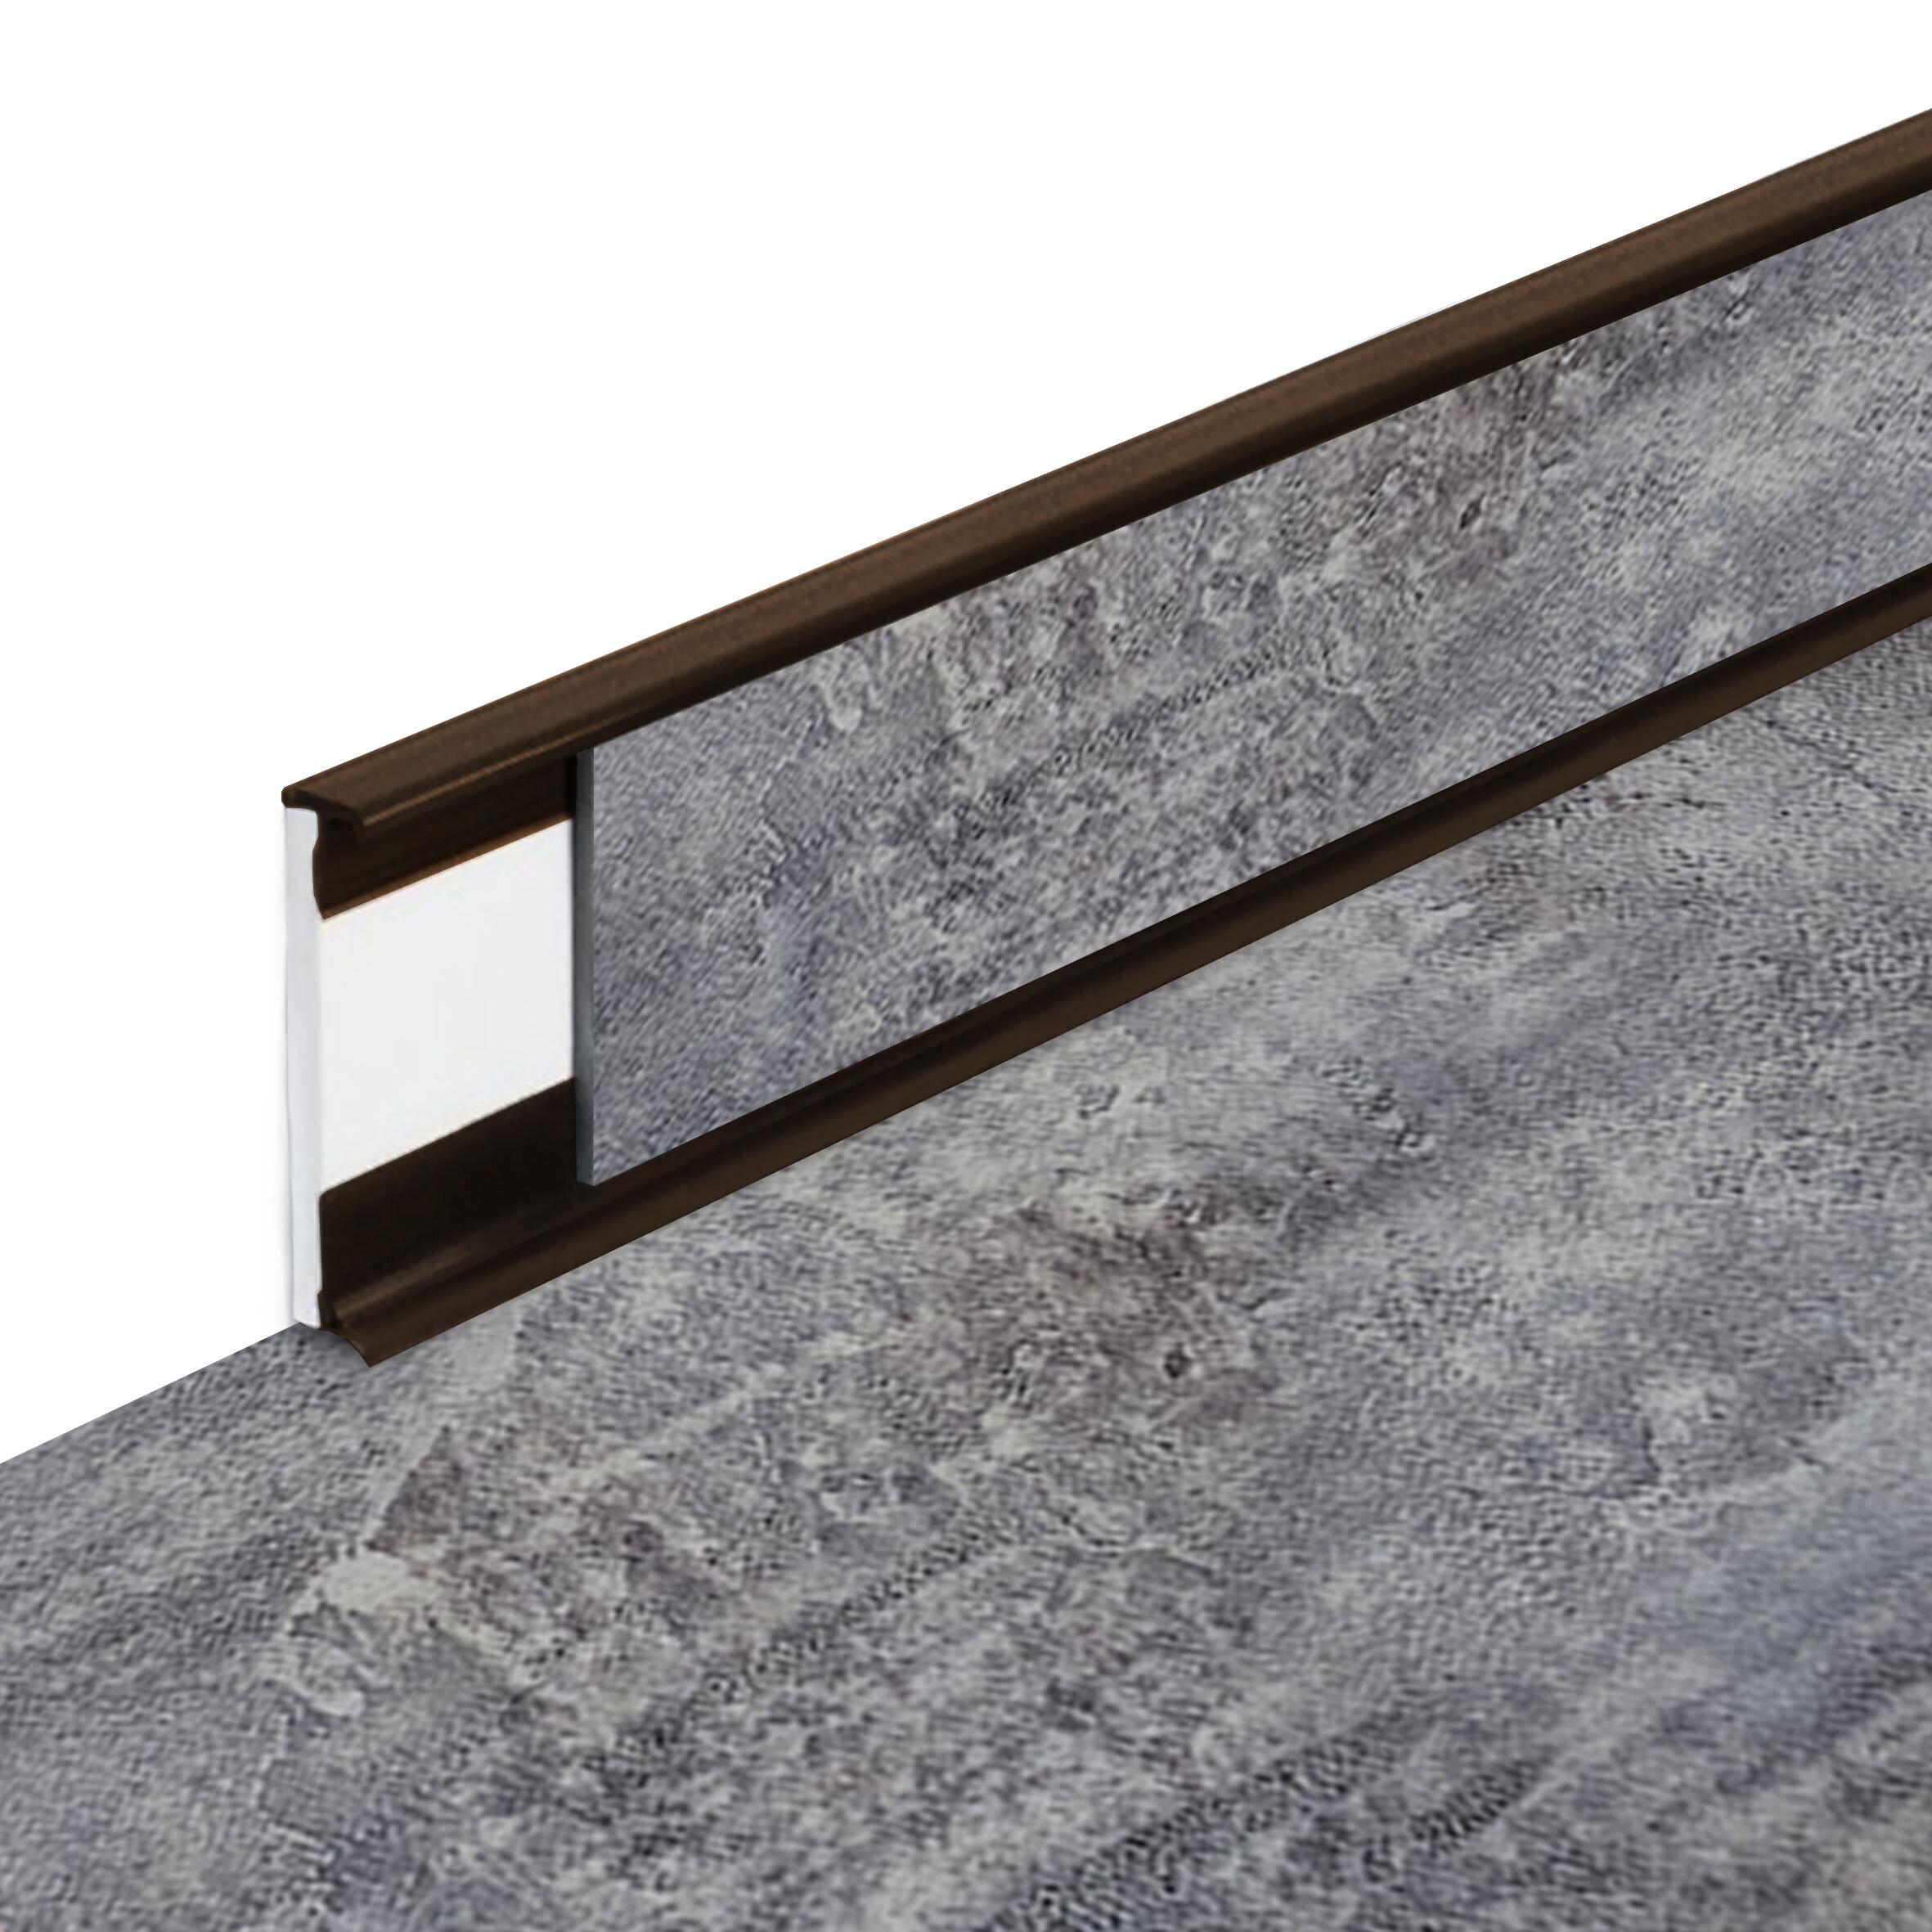 PVC vinylová soklová podlahová lišta Fortelock Business Forsen Mountain Peak C017 Brown - délka 200 cm, výška 5,8 cm, tloušťka 1,2 cm